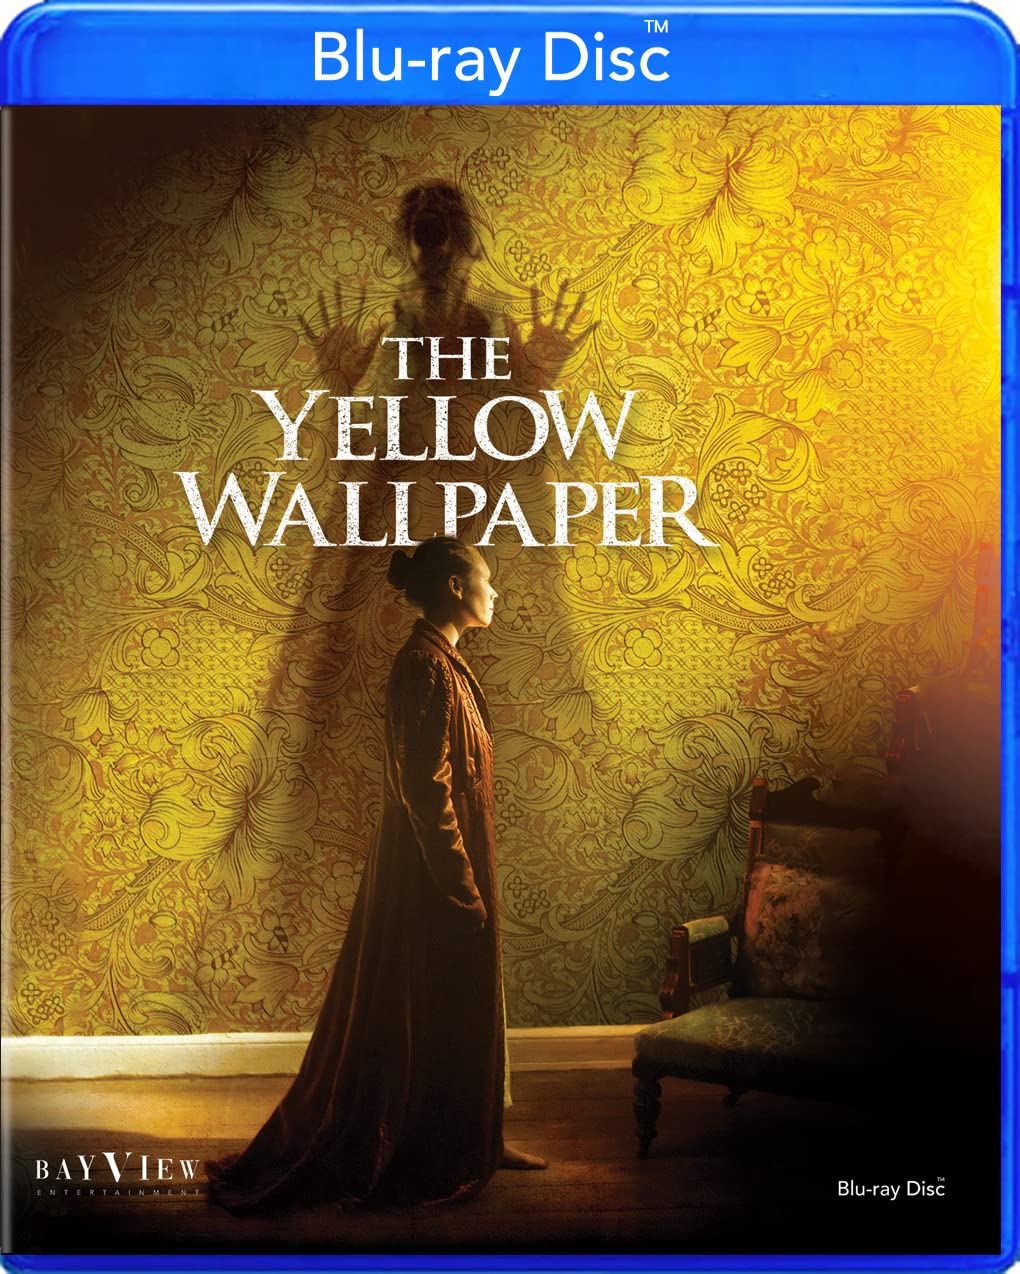 Charlotte Gilman's Yellow Wallpaper: Summary & Analysis | SchoolWorkHelper